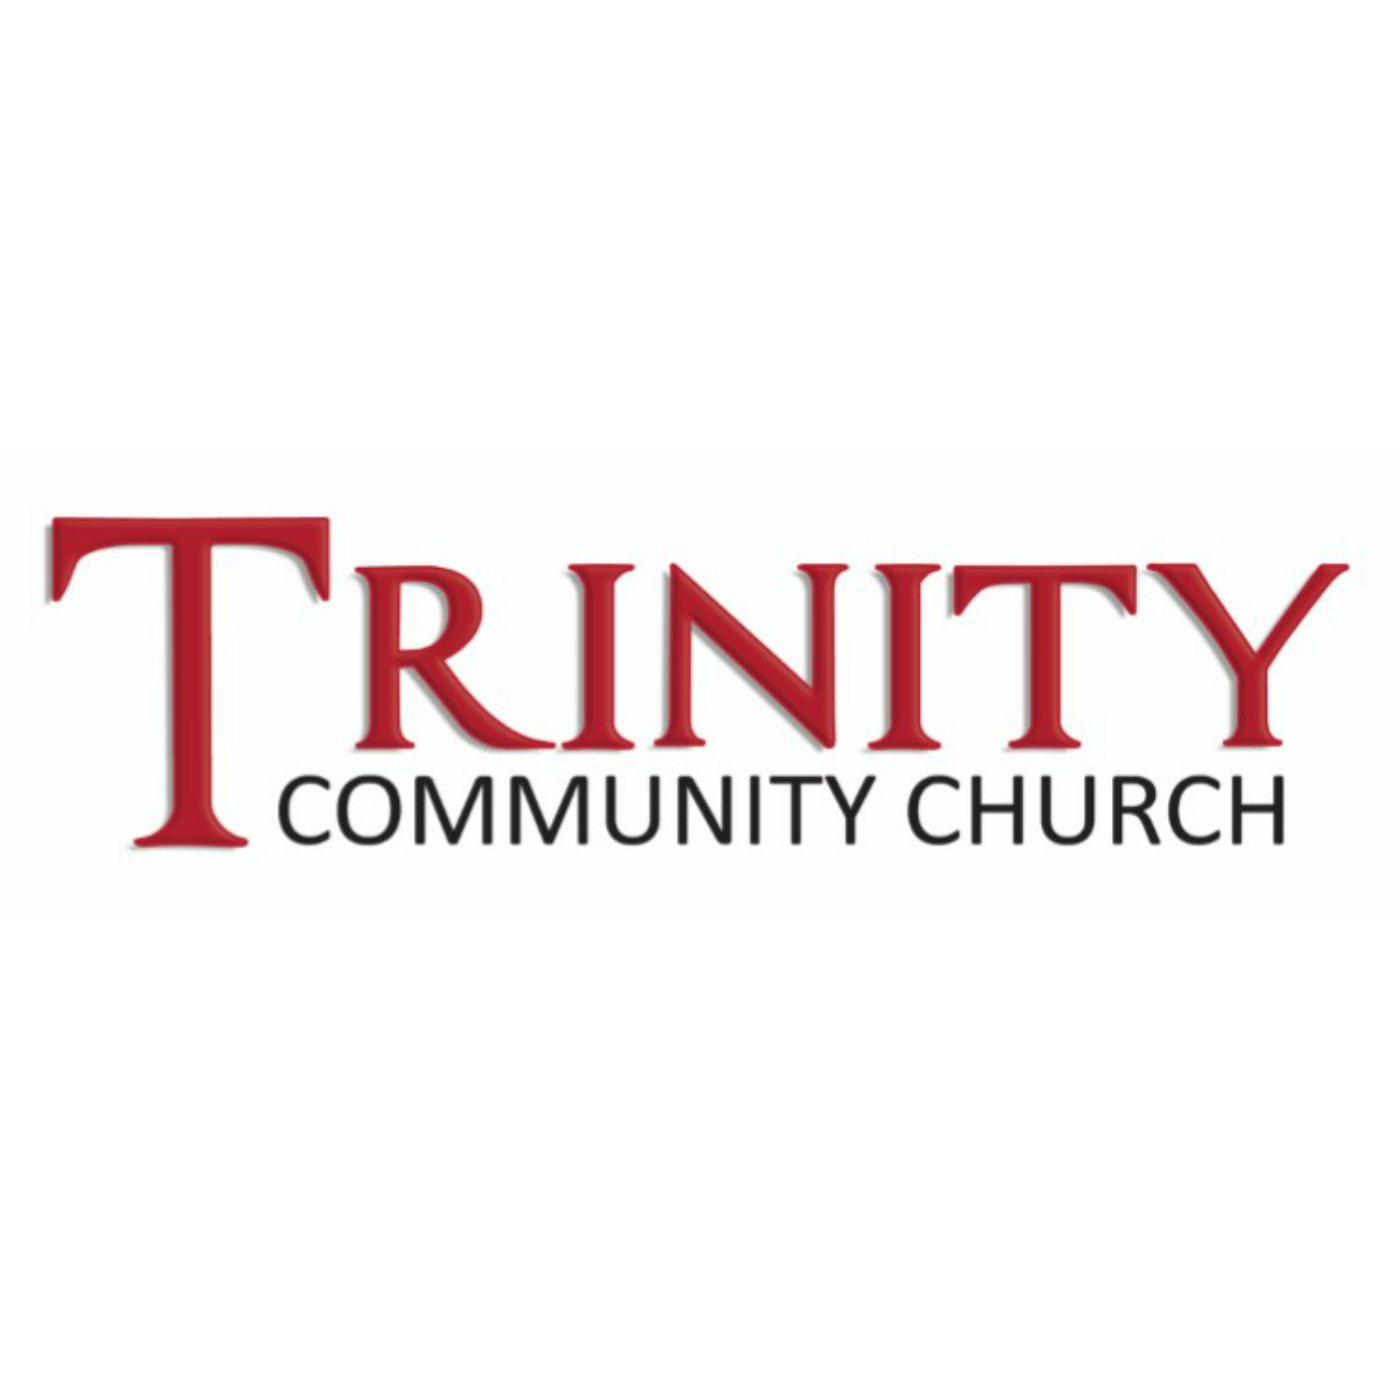 Sermons - Trinity Community Church